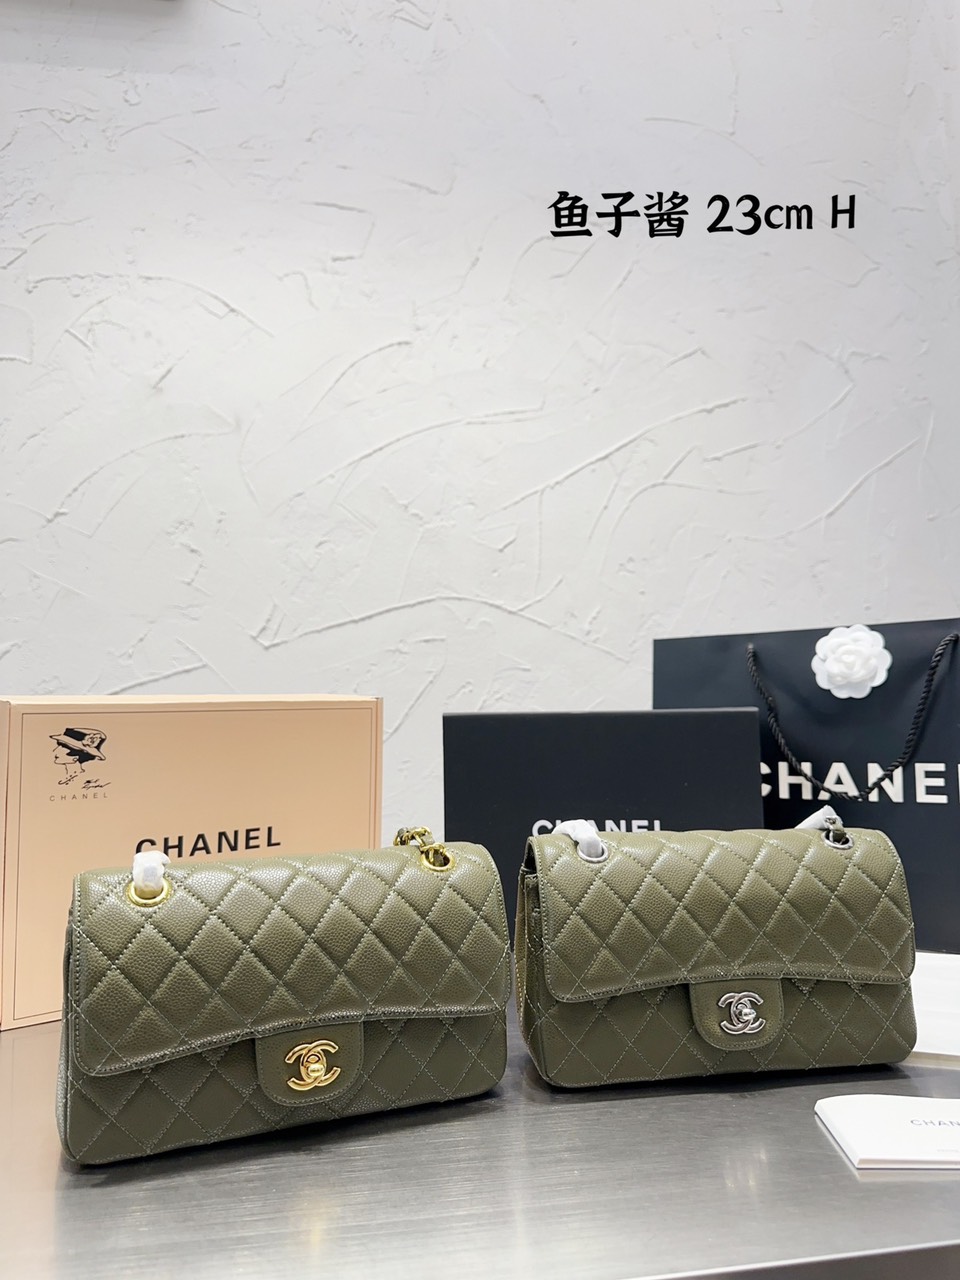 Tổng Hợp Túi Xách Chanel Classic Super Da Hạt Size 23cm